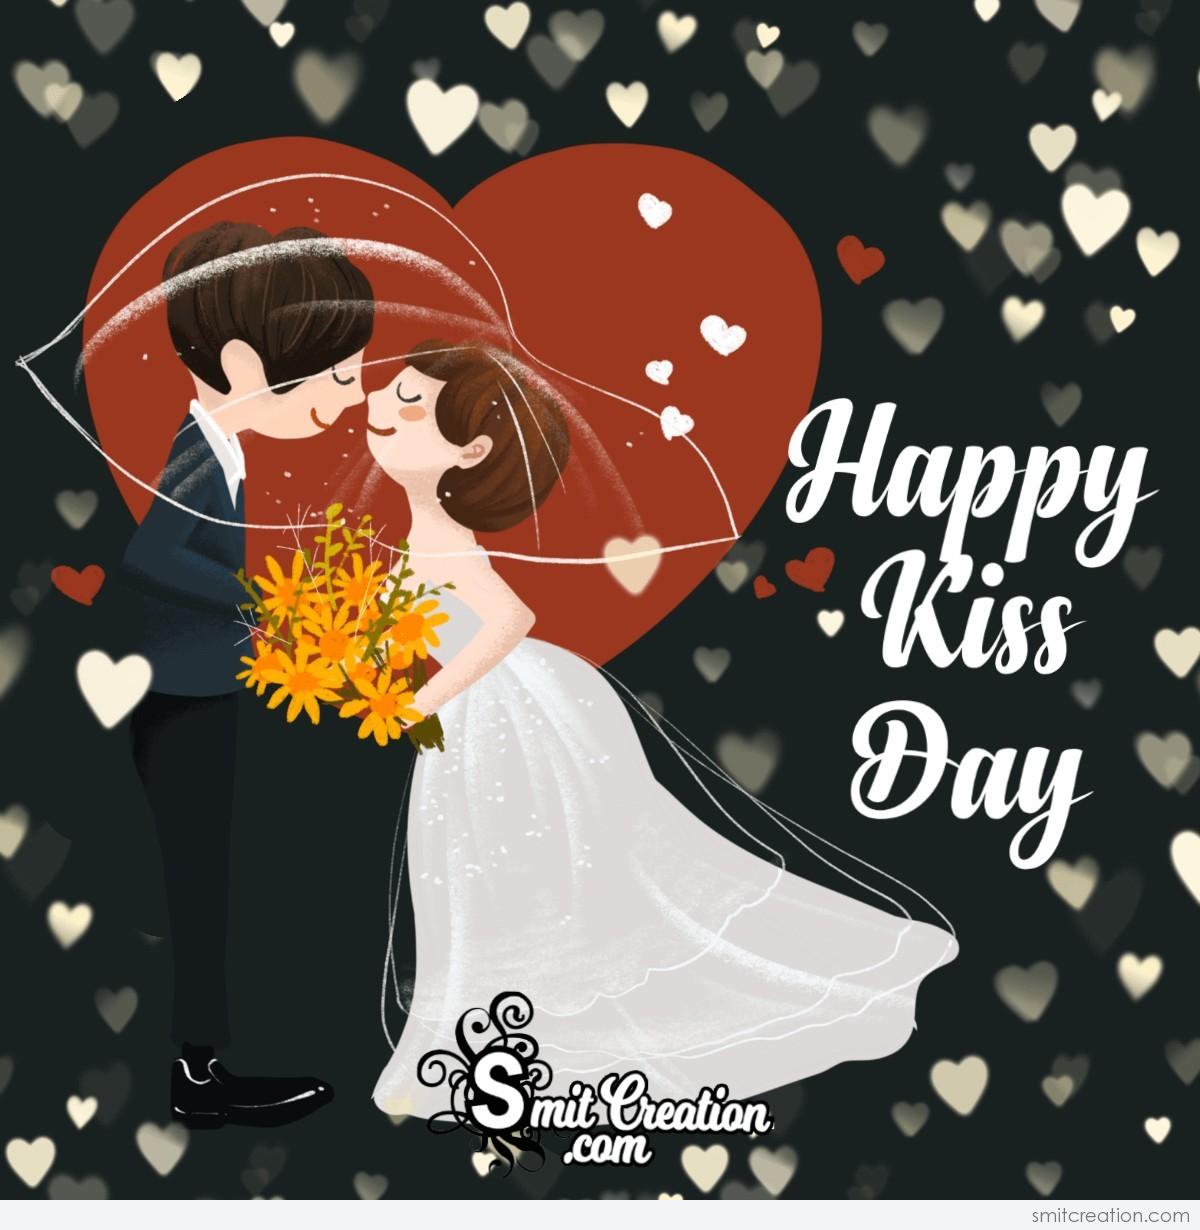 Happy Kiss Day Images - SmitCreation.com